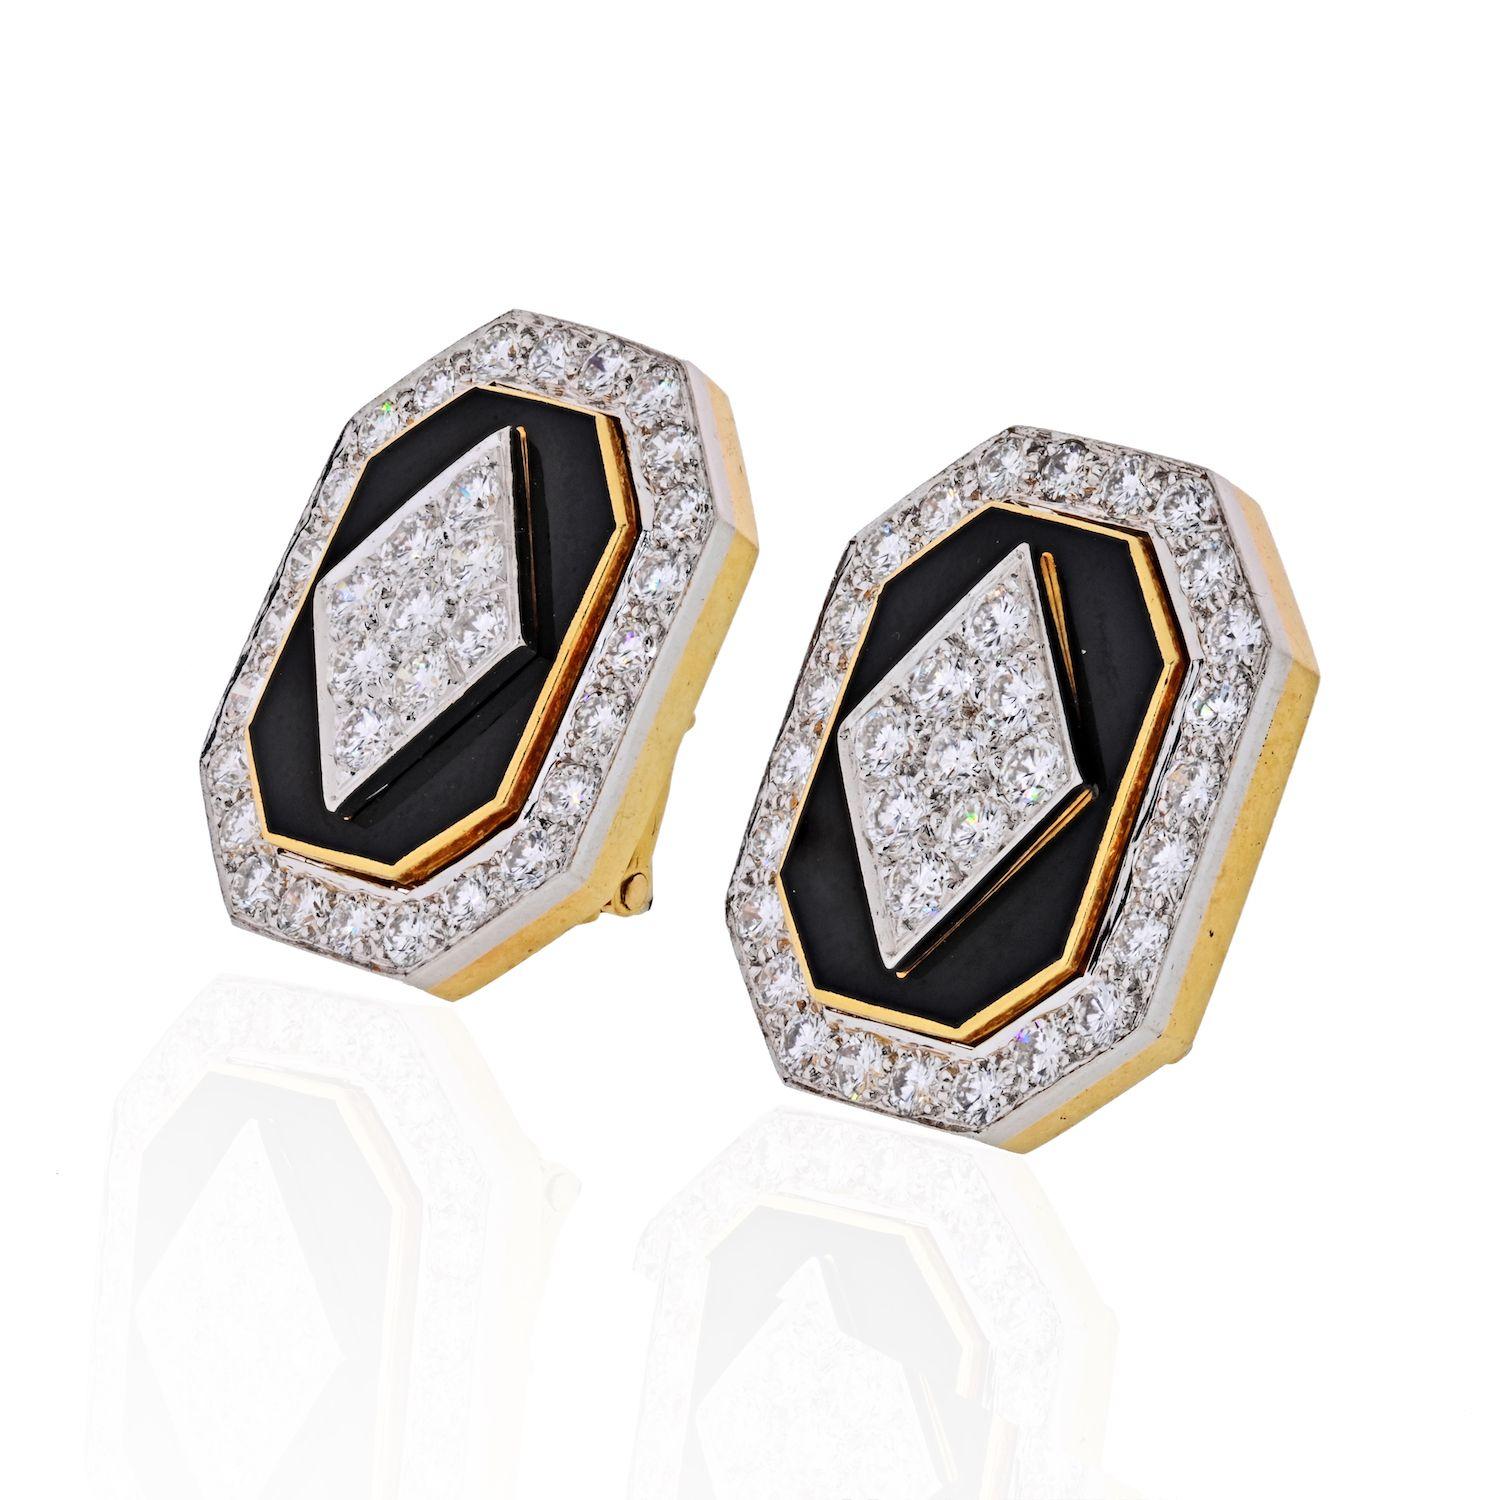 Elegant diamond and black enamel ear-clips by David Webb. Each designed as a black enamel octagonal-shaped plaque, enhanced with circular-cut diamonds, mounted in platinum and 18k gold. 
L: 22mm x 18mm.
